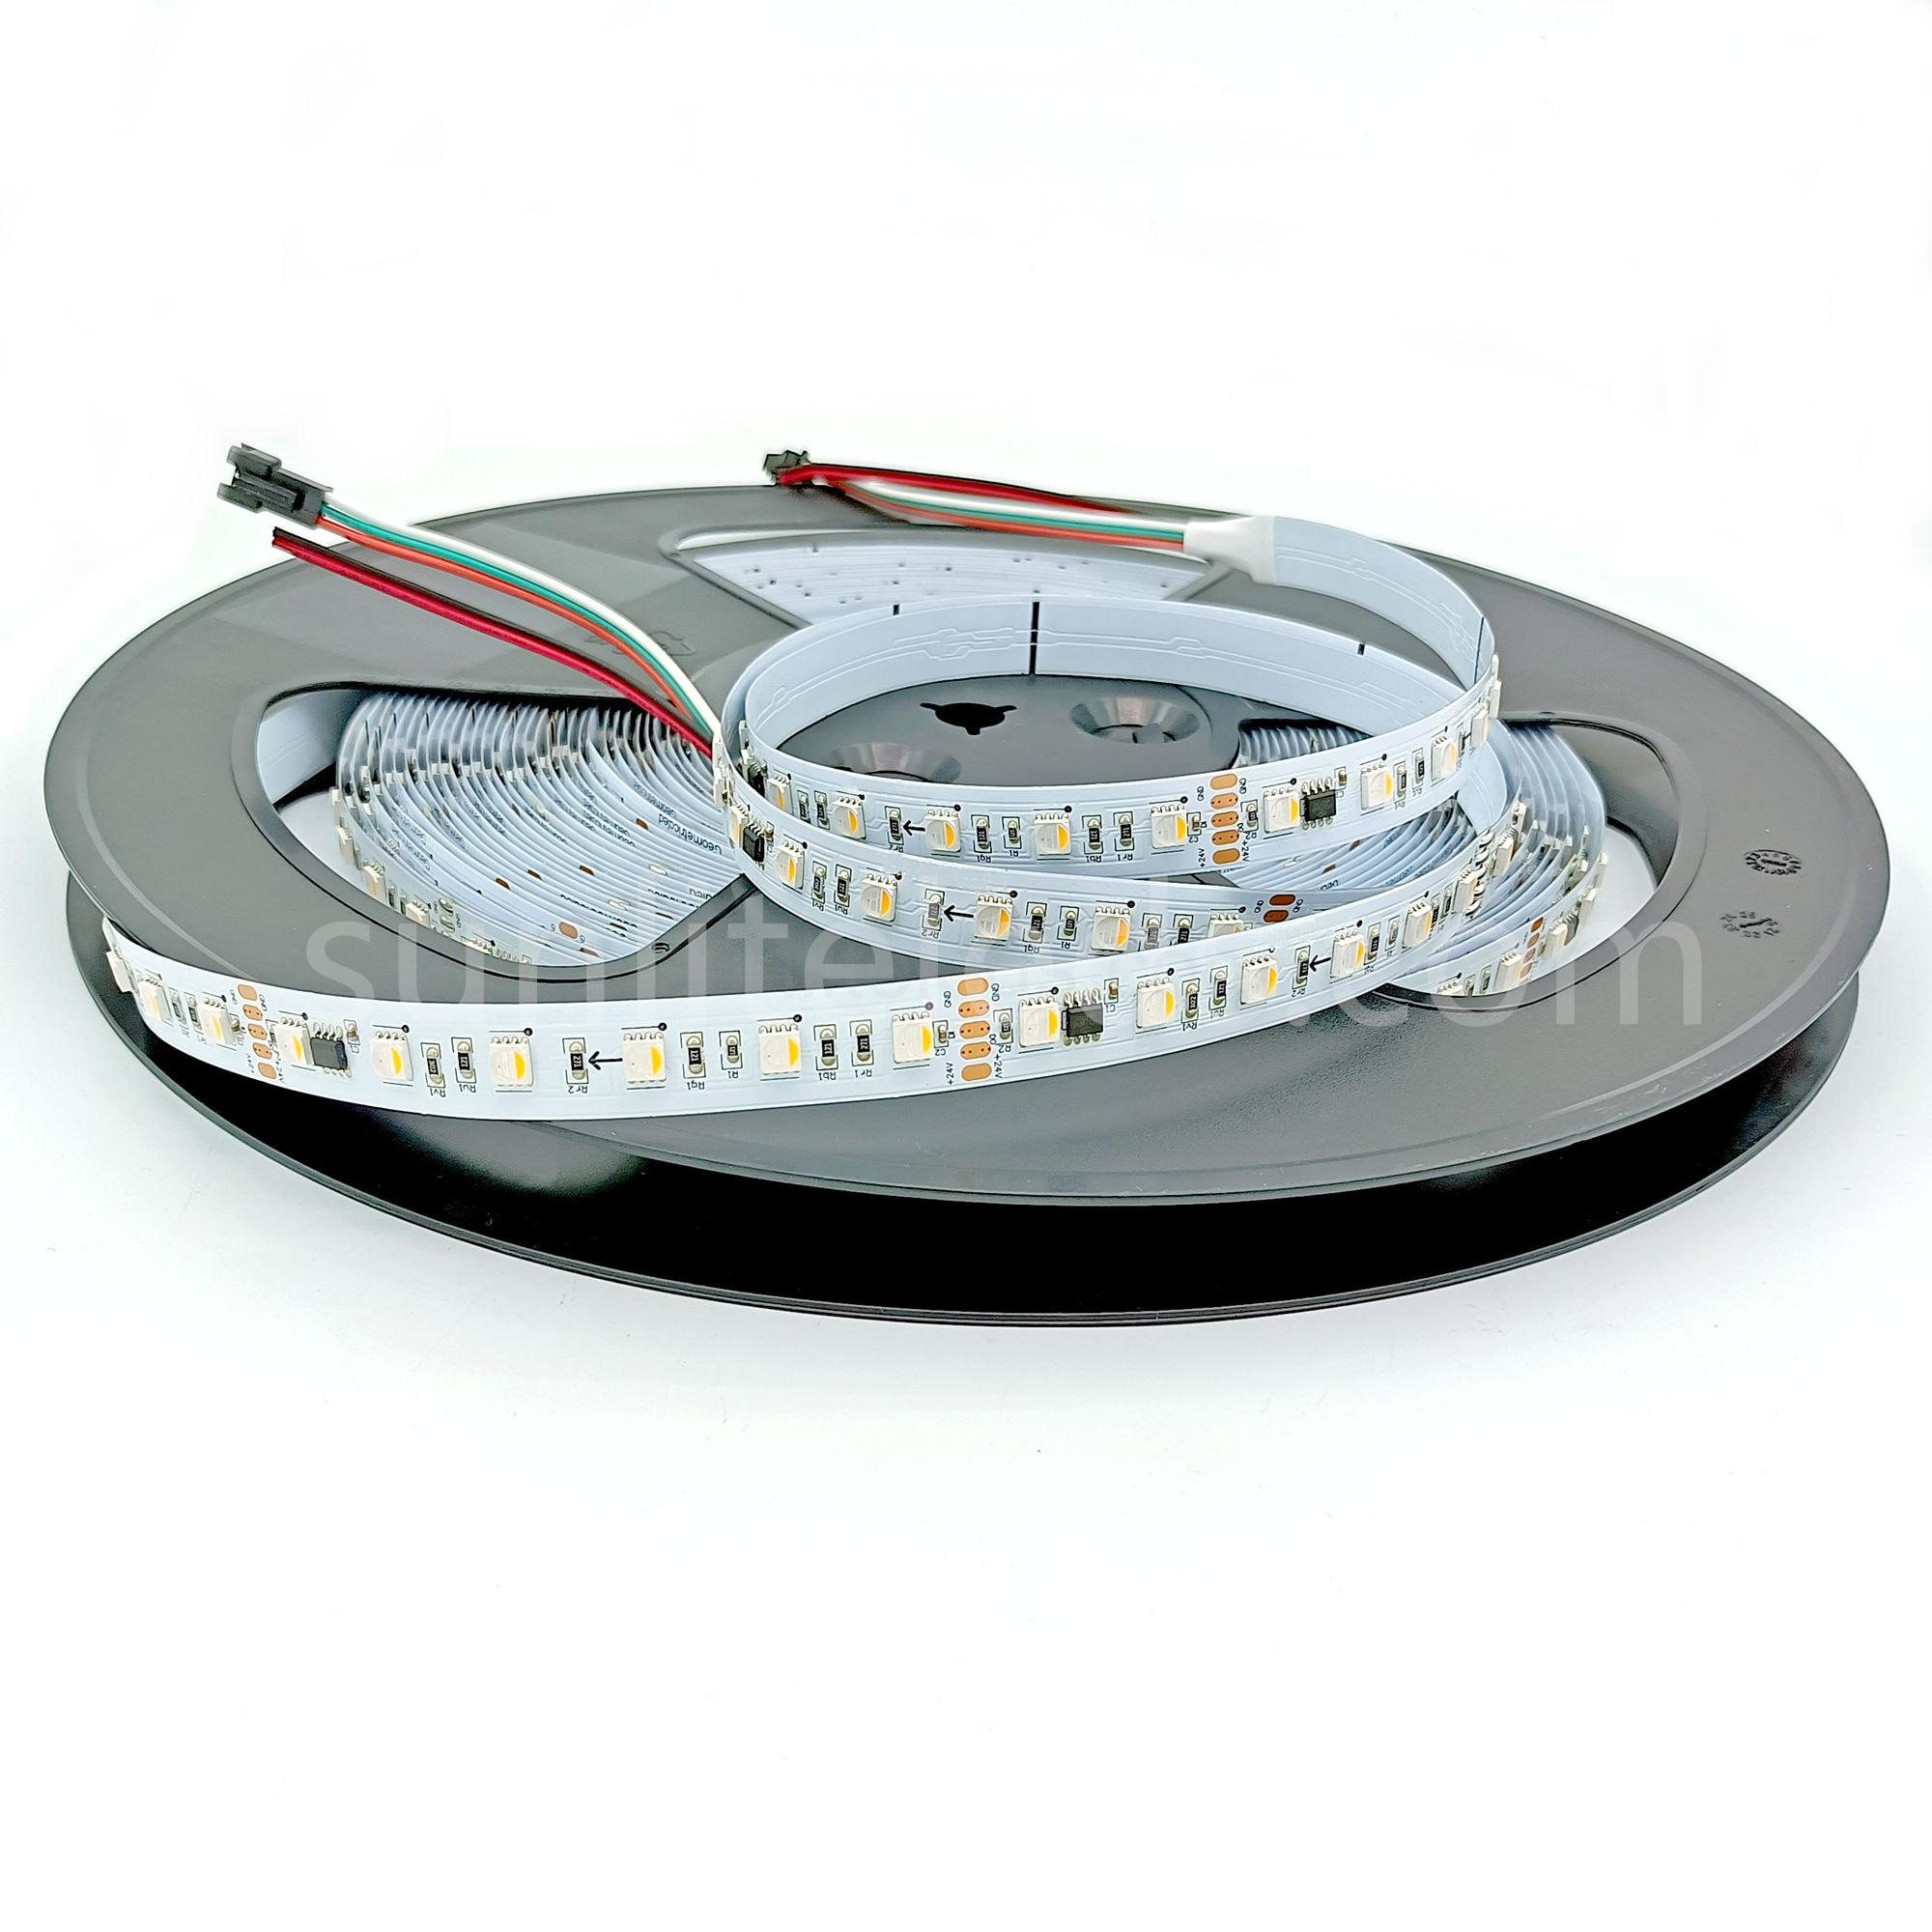 UCS2904 RGBW LED Strip provide creative lighting solution